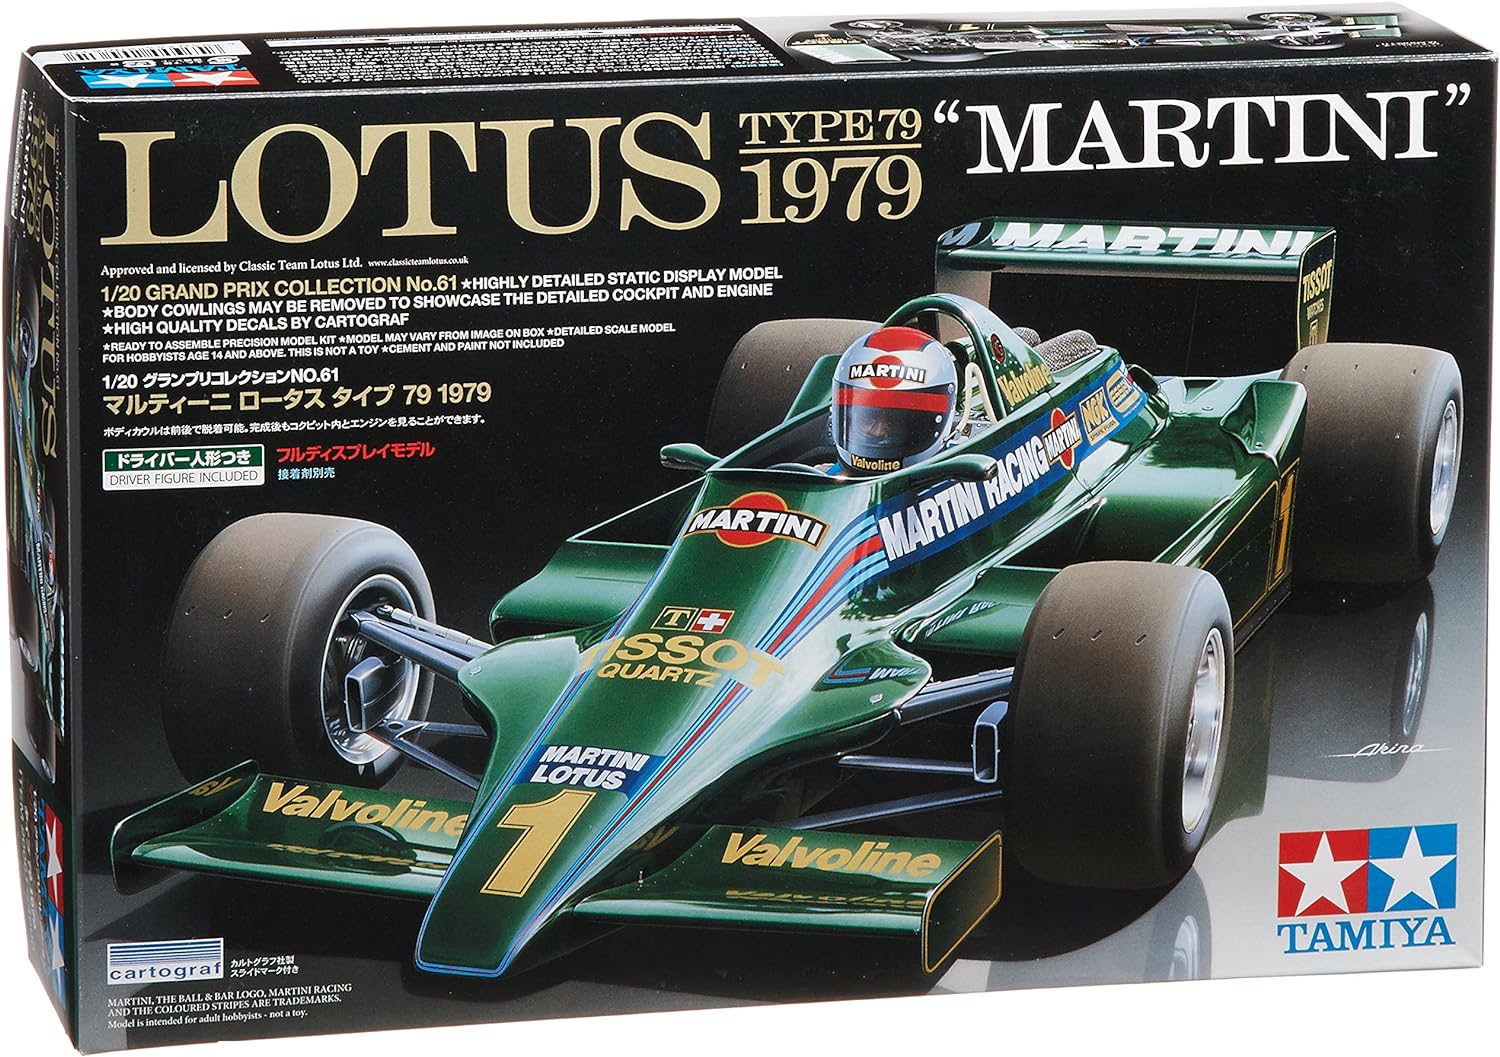 Lotus 79 1979 "Martini"